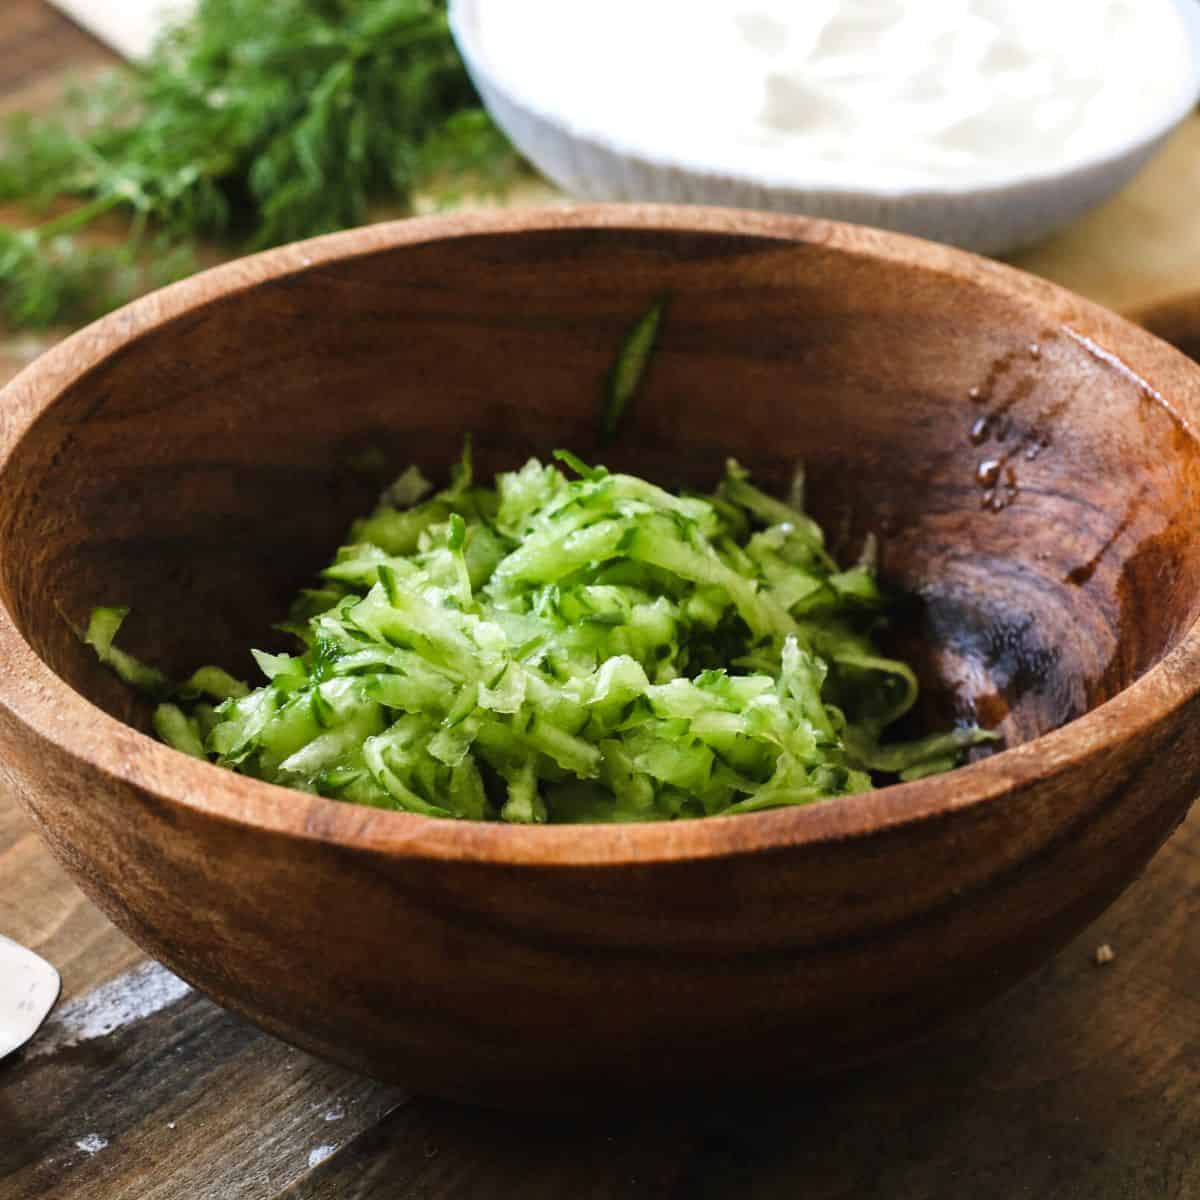 how to make tzatziki sauce - strained cucumber